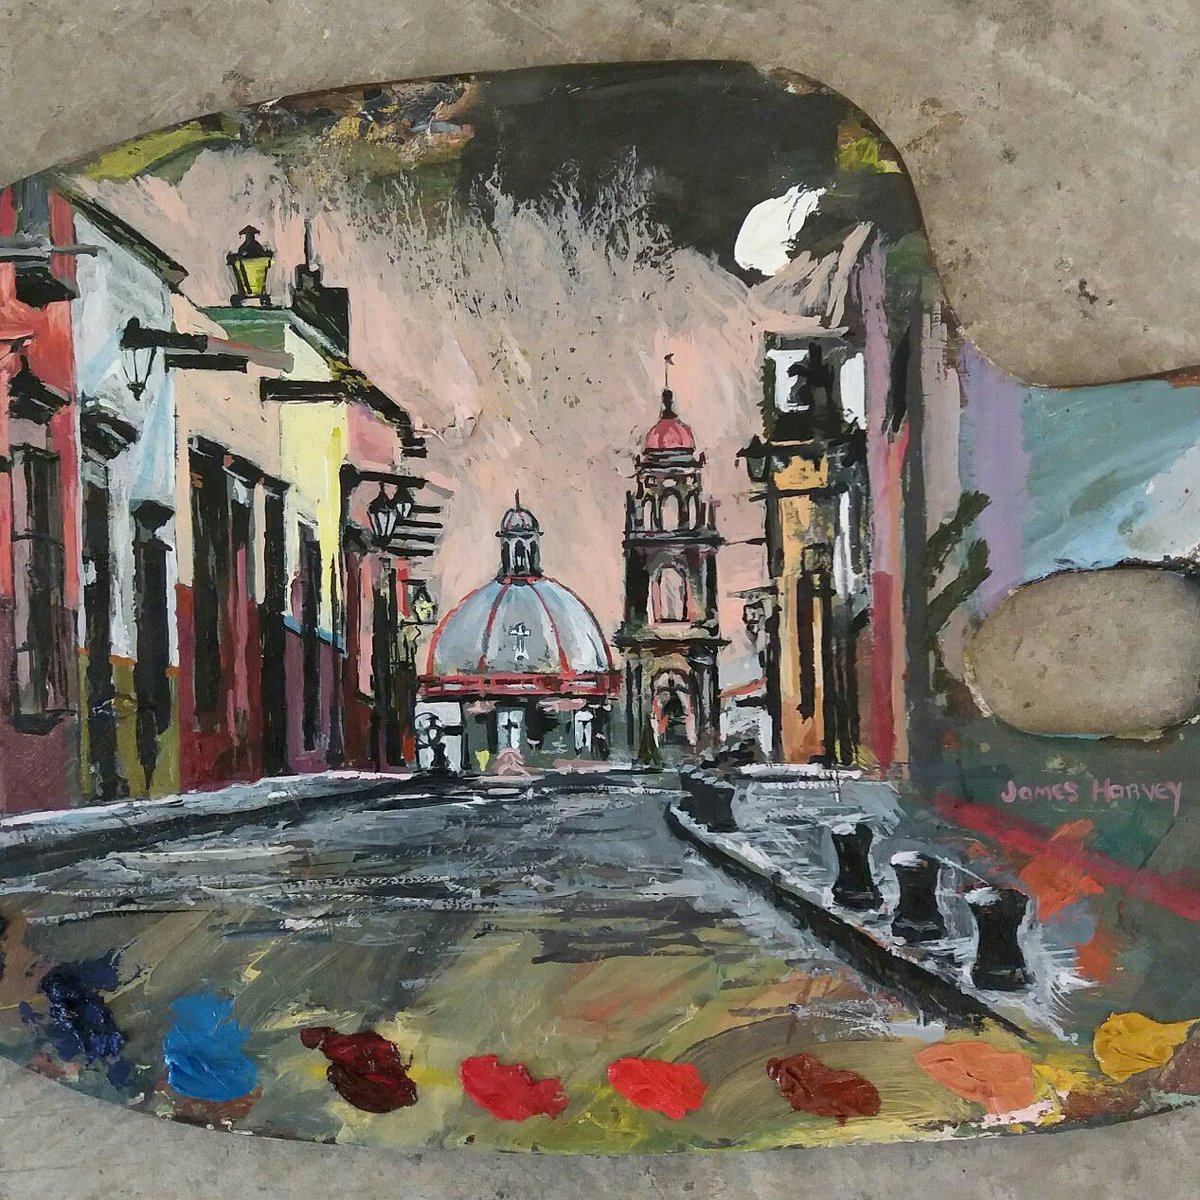 'View on Recreo'
San Miguel de Allende
Oil on Palette
10' x 16'
#emergingartist #contempoaryartist #art #SanMigueldeAllende